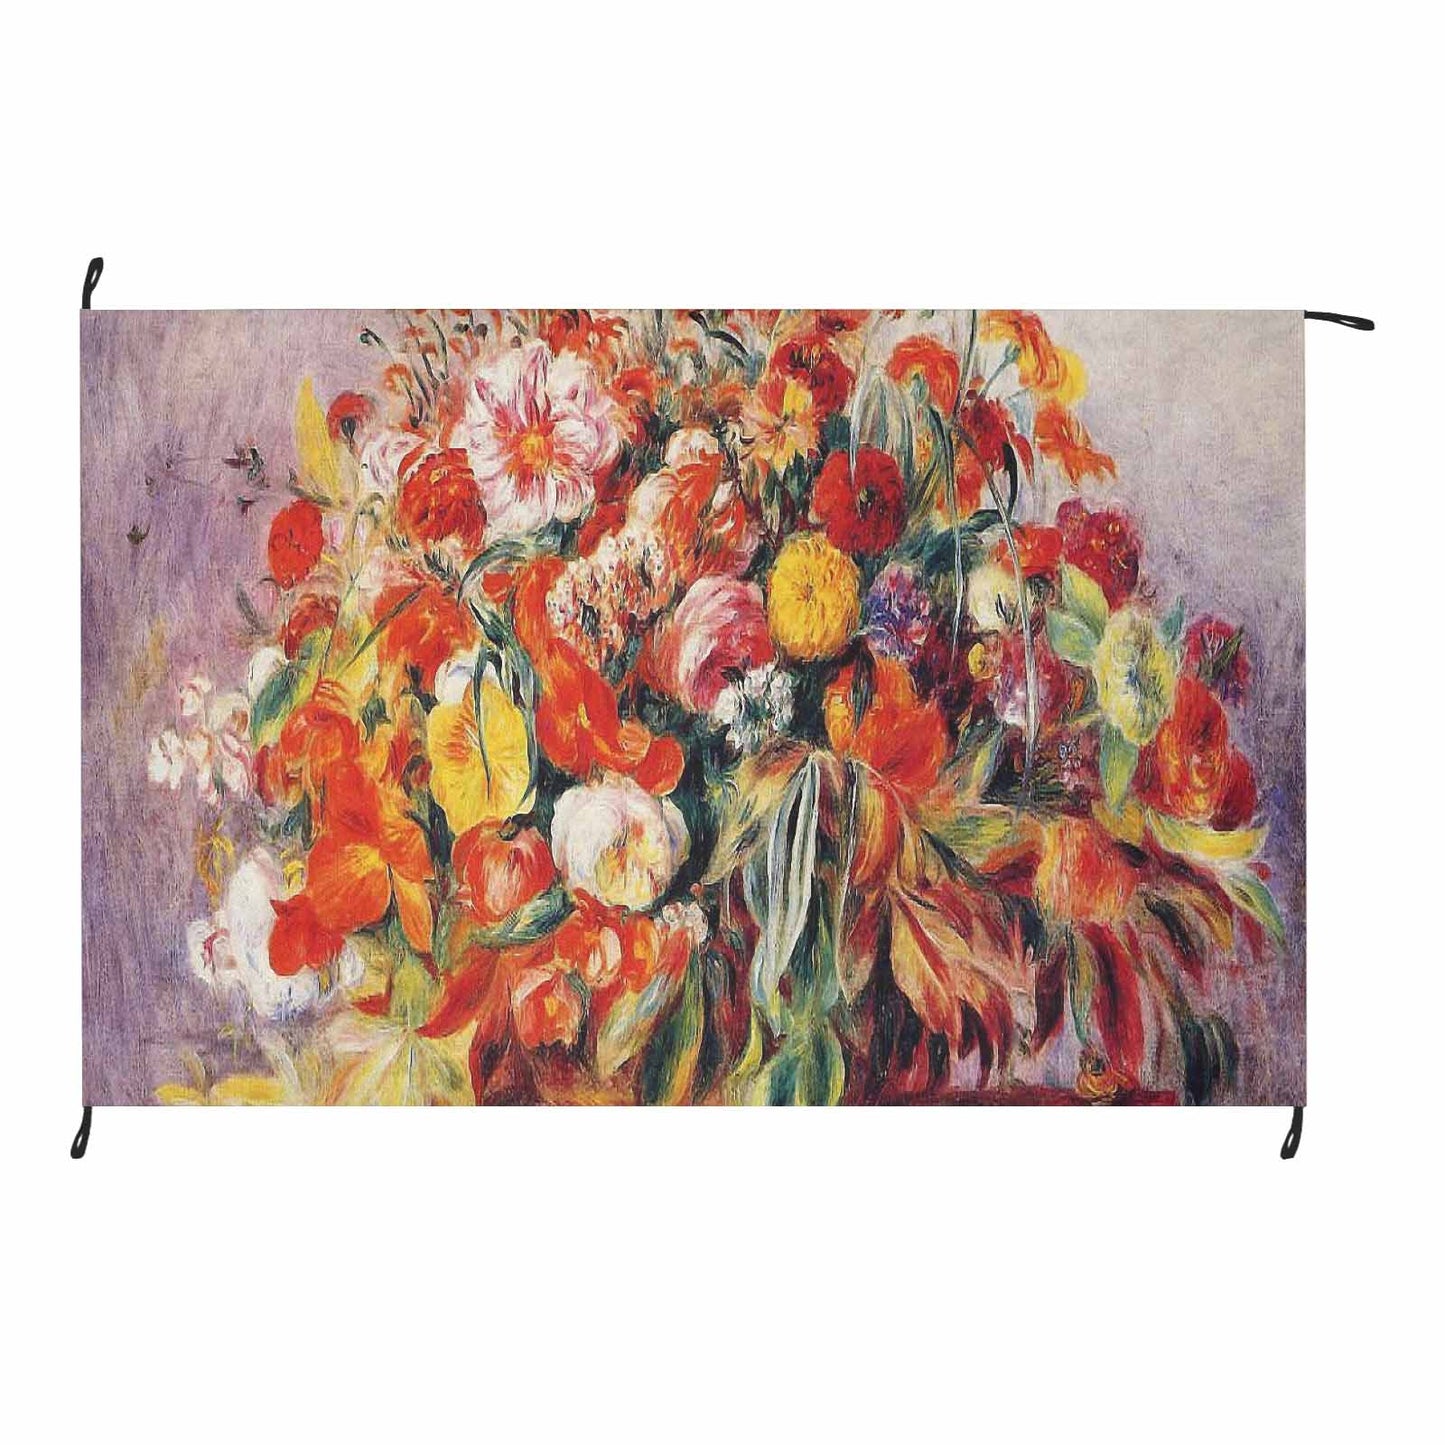 Vintage Floral waterproof picnic mat, 81 x 55in, Design 19